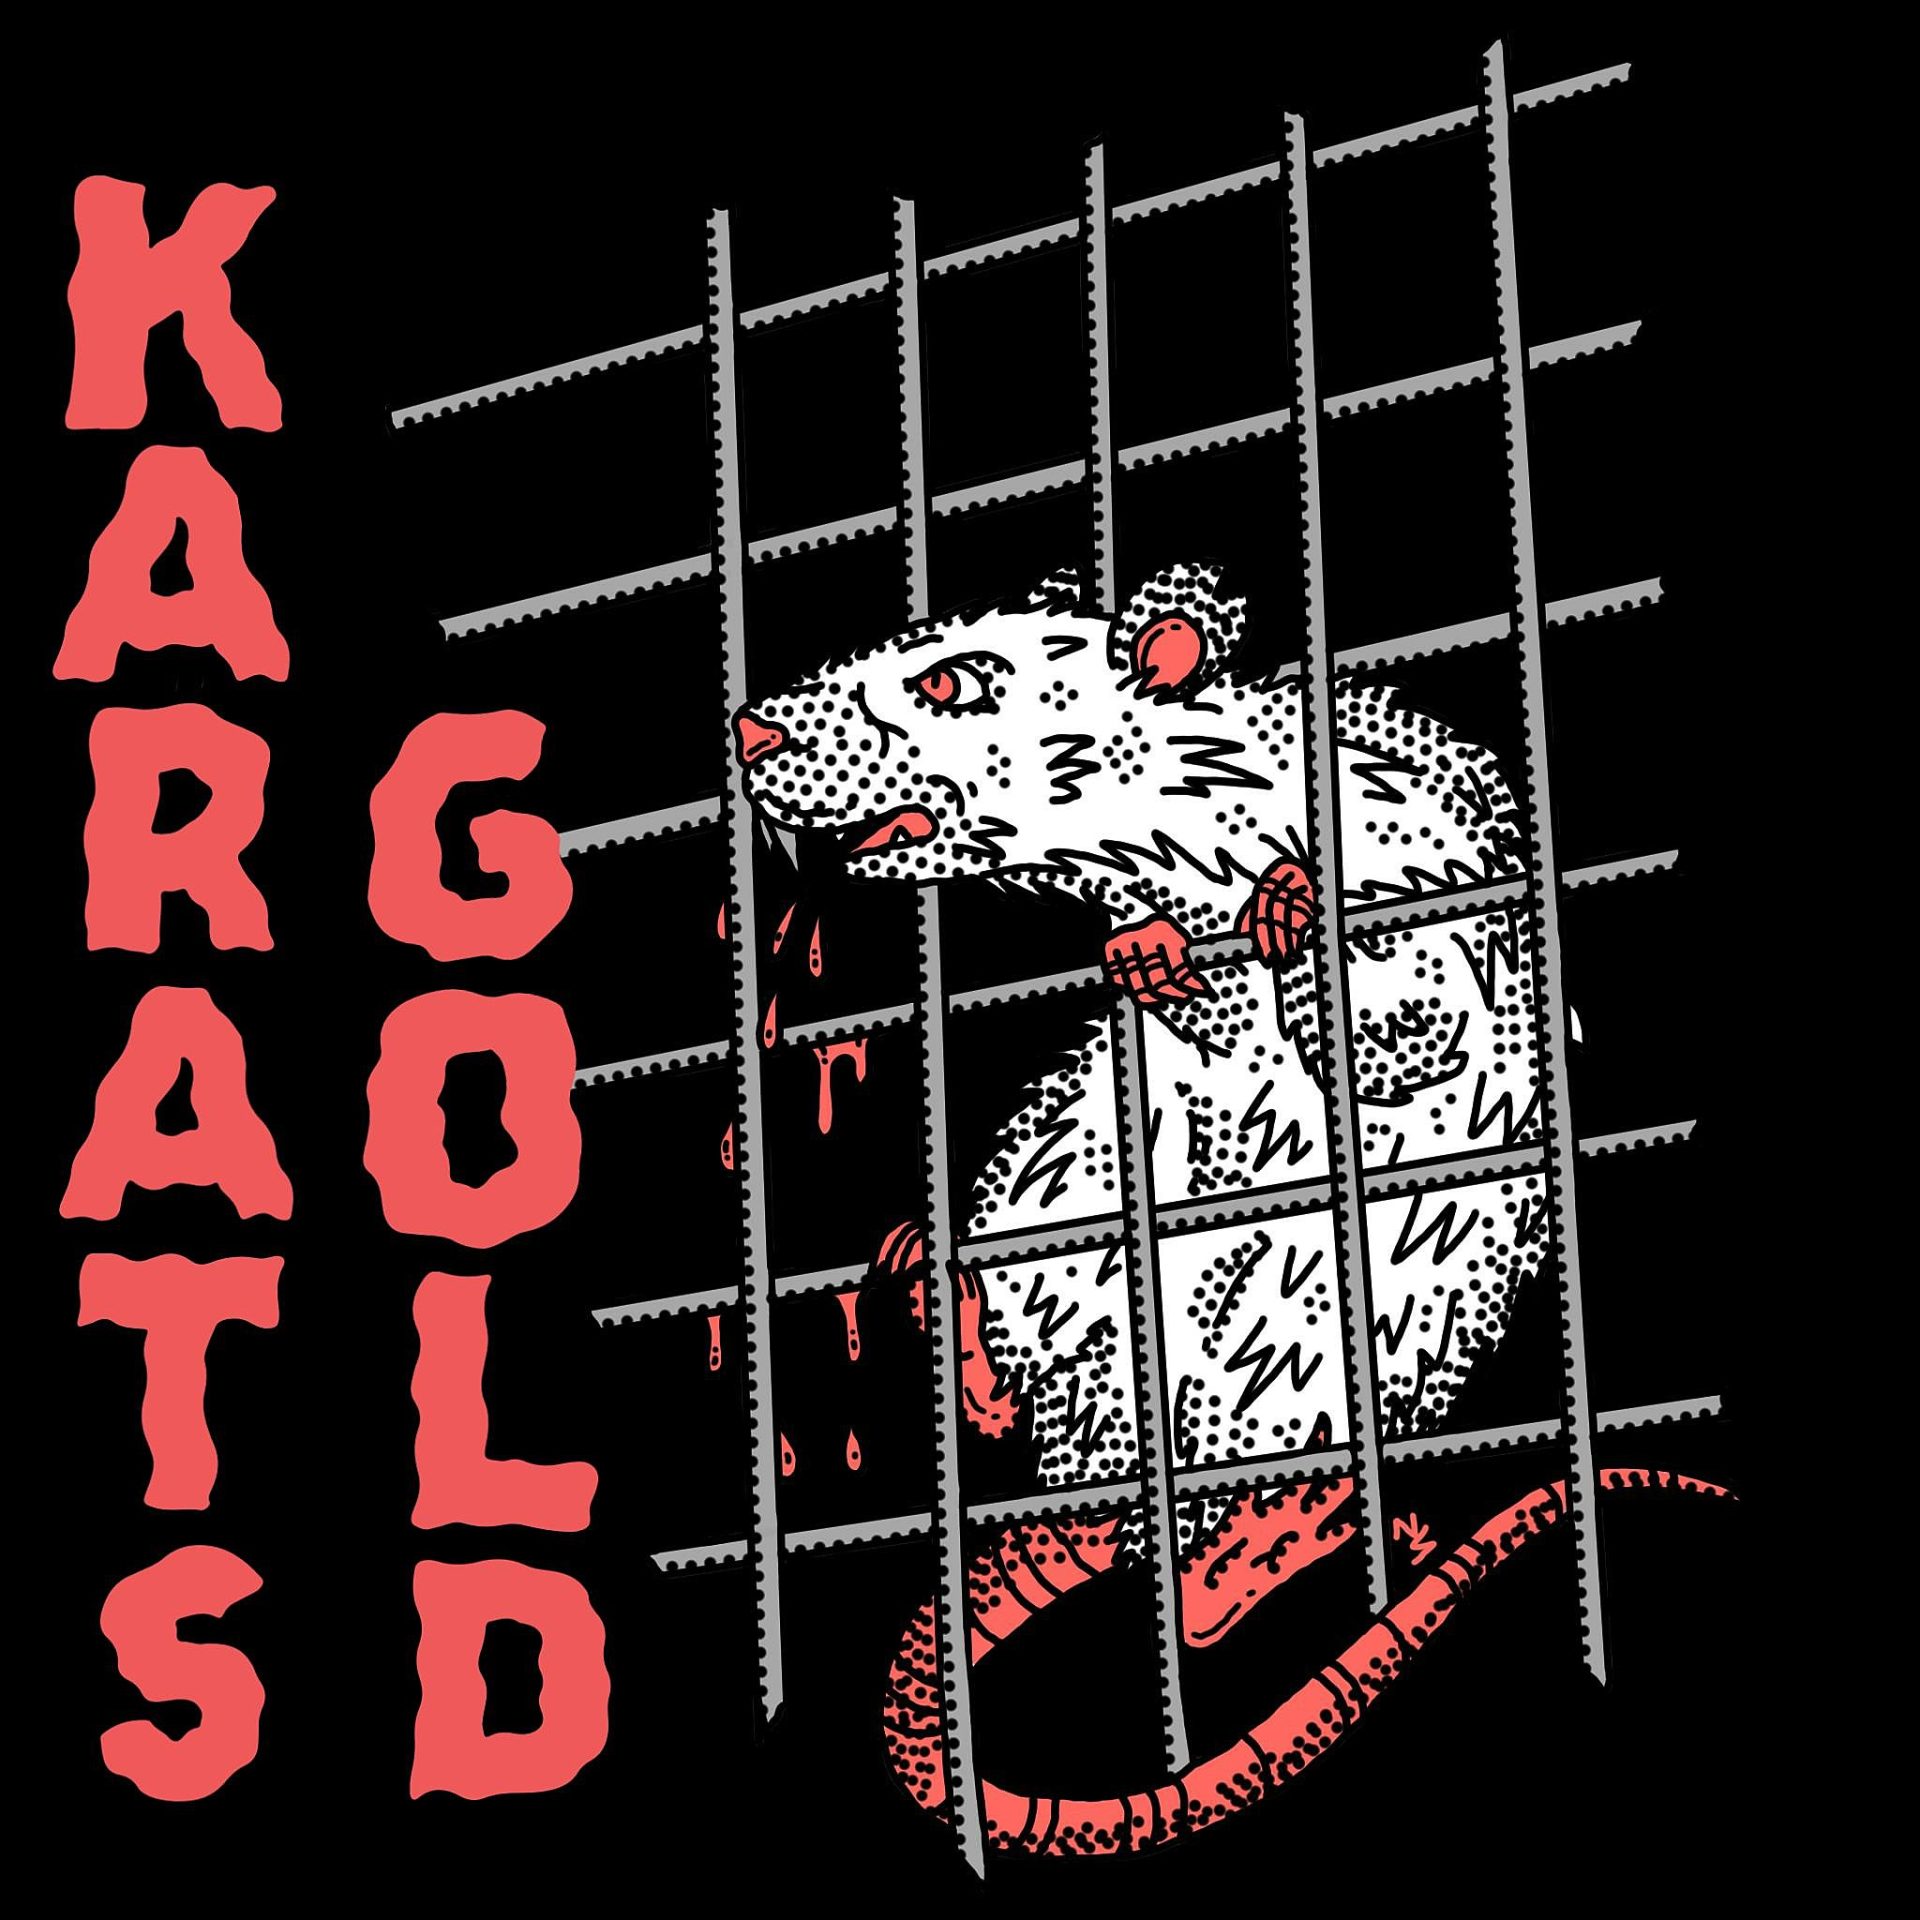 Karat's Gold Rat